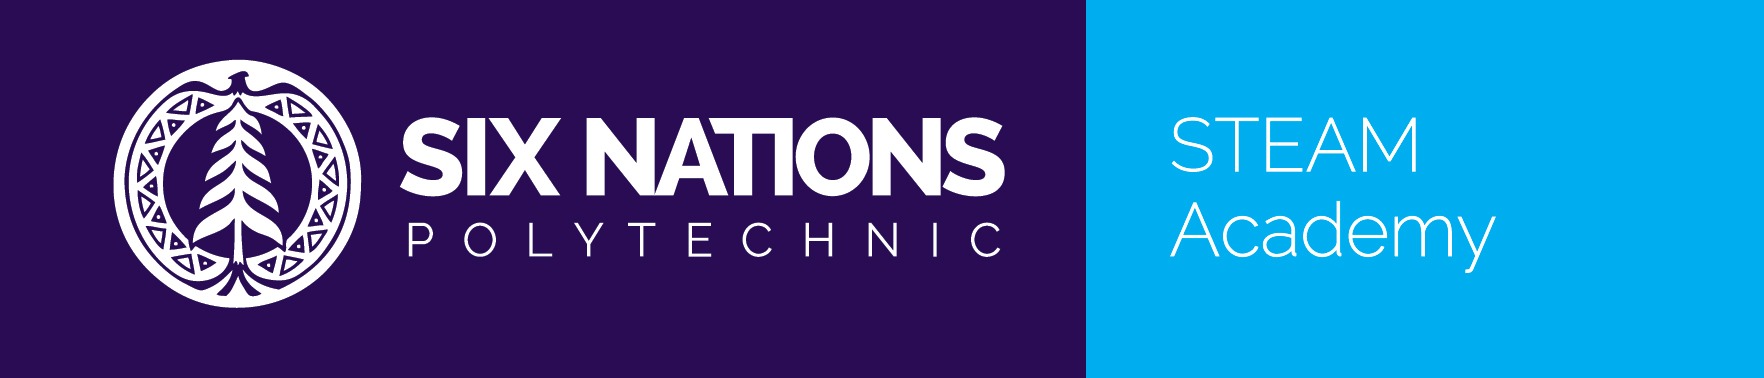 alt= Six Nations Polytechnic Steam Academy logo